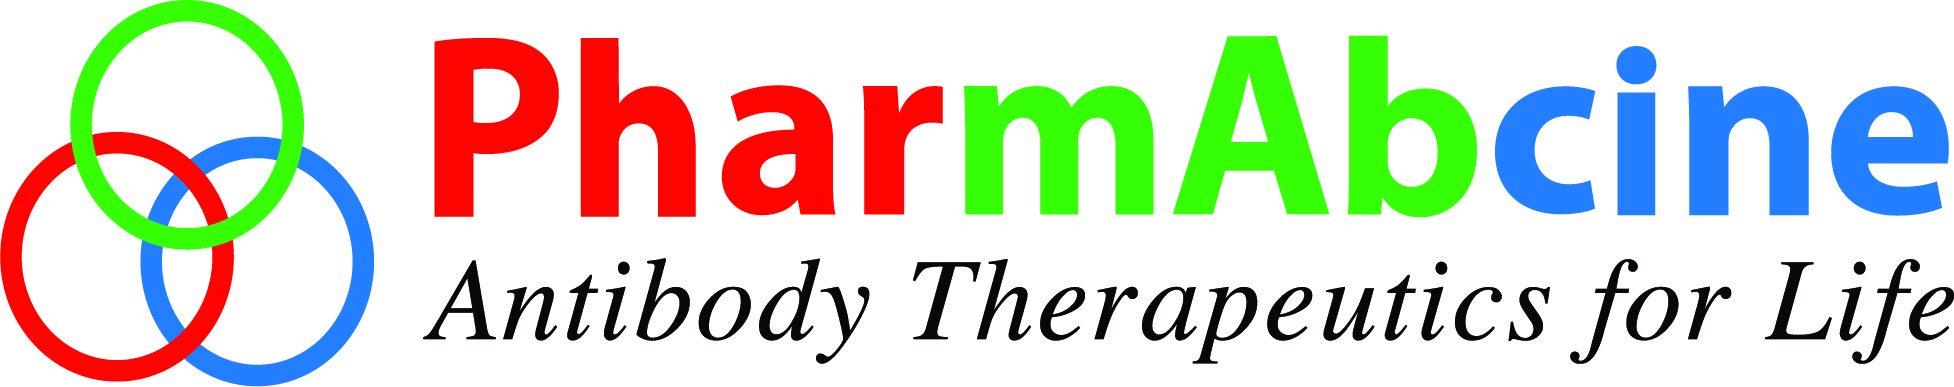 PharmAbcine Logo.jpg 사진